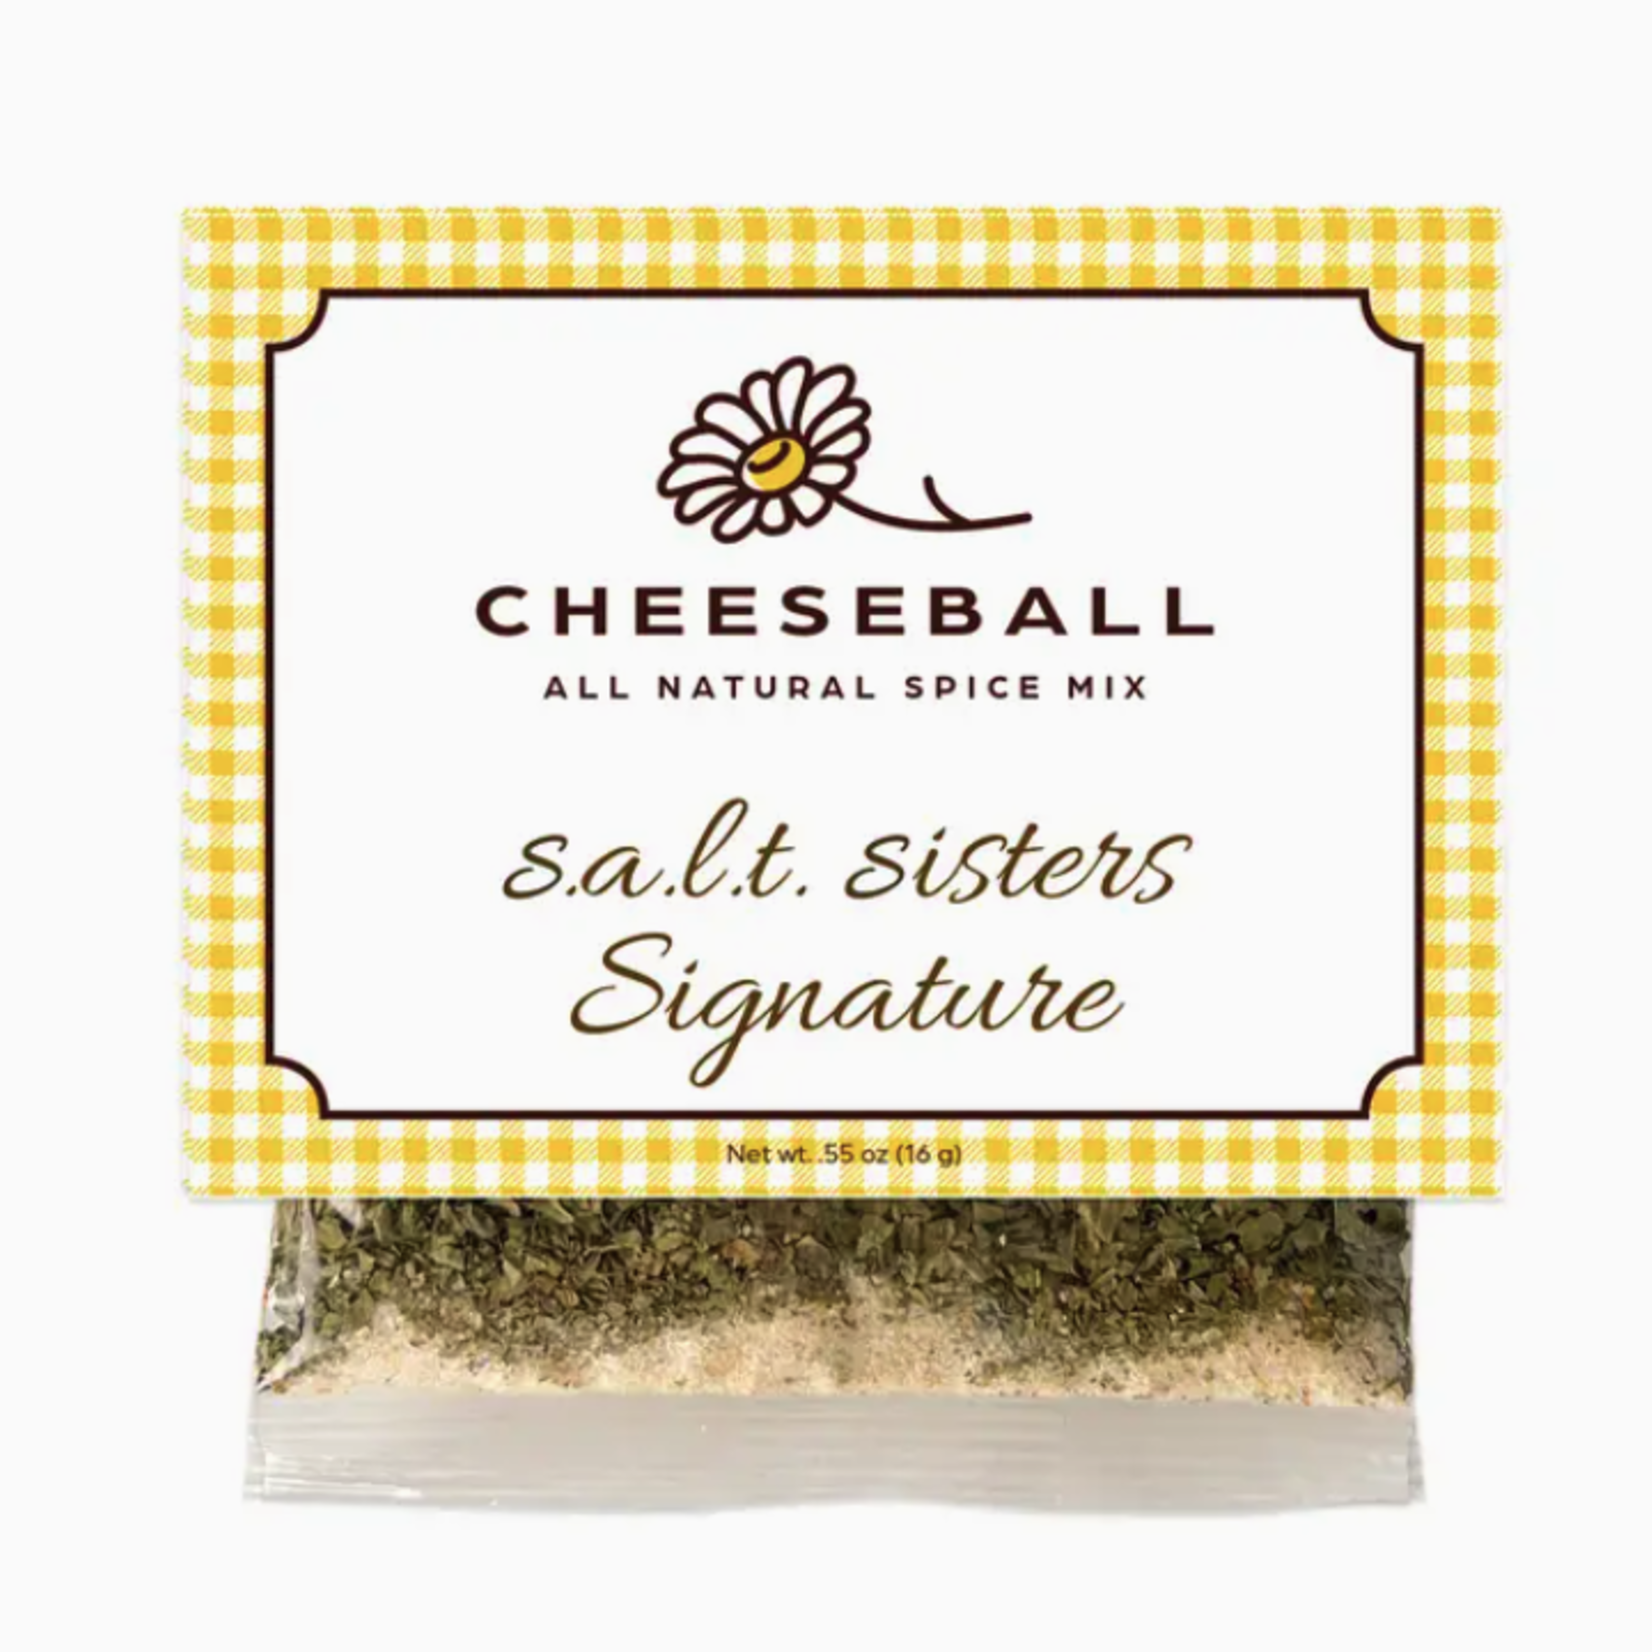 Salt Sisters S.A.L.T. Sisters Signature Cheeseball